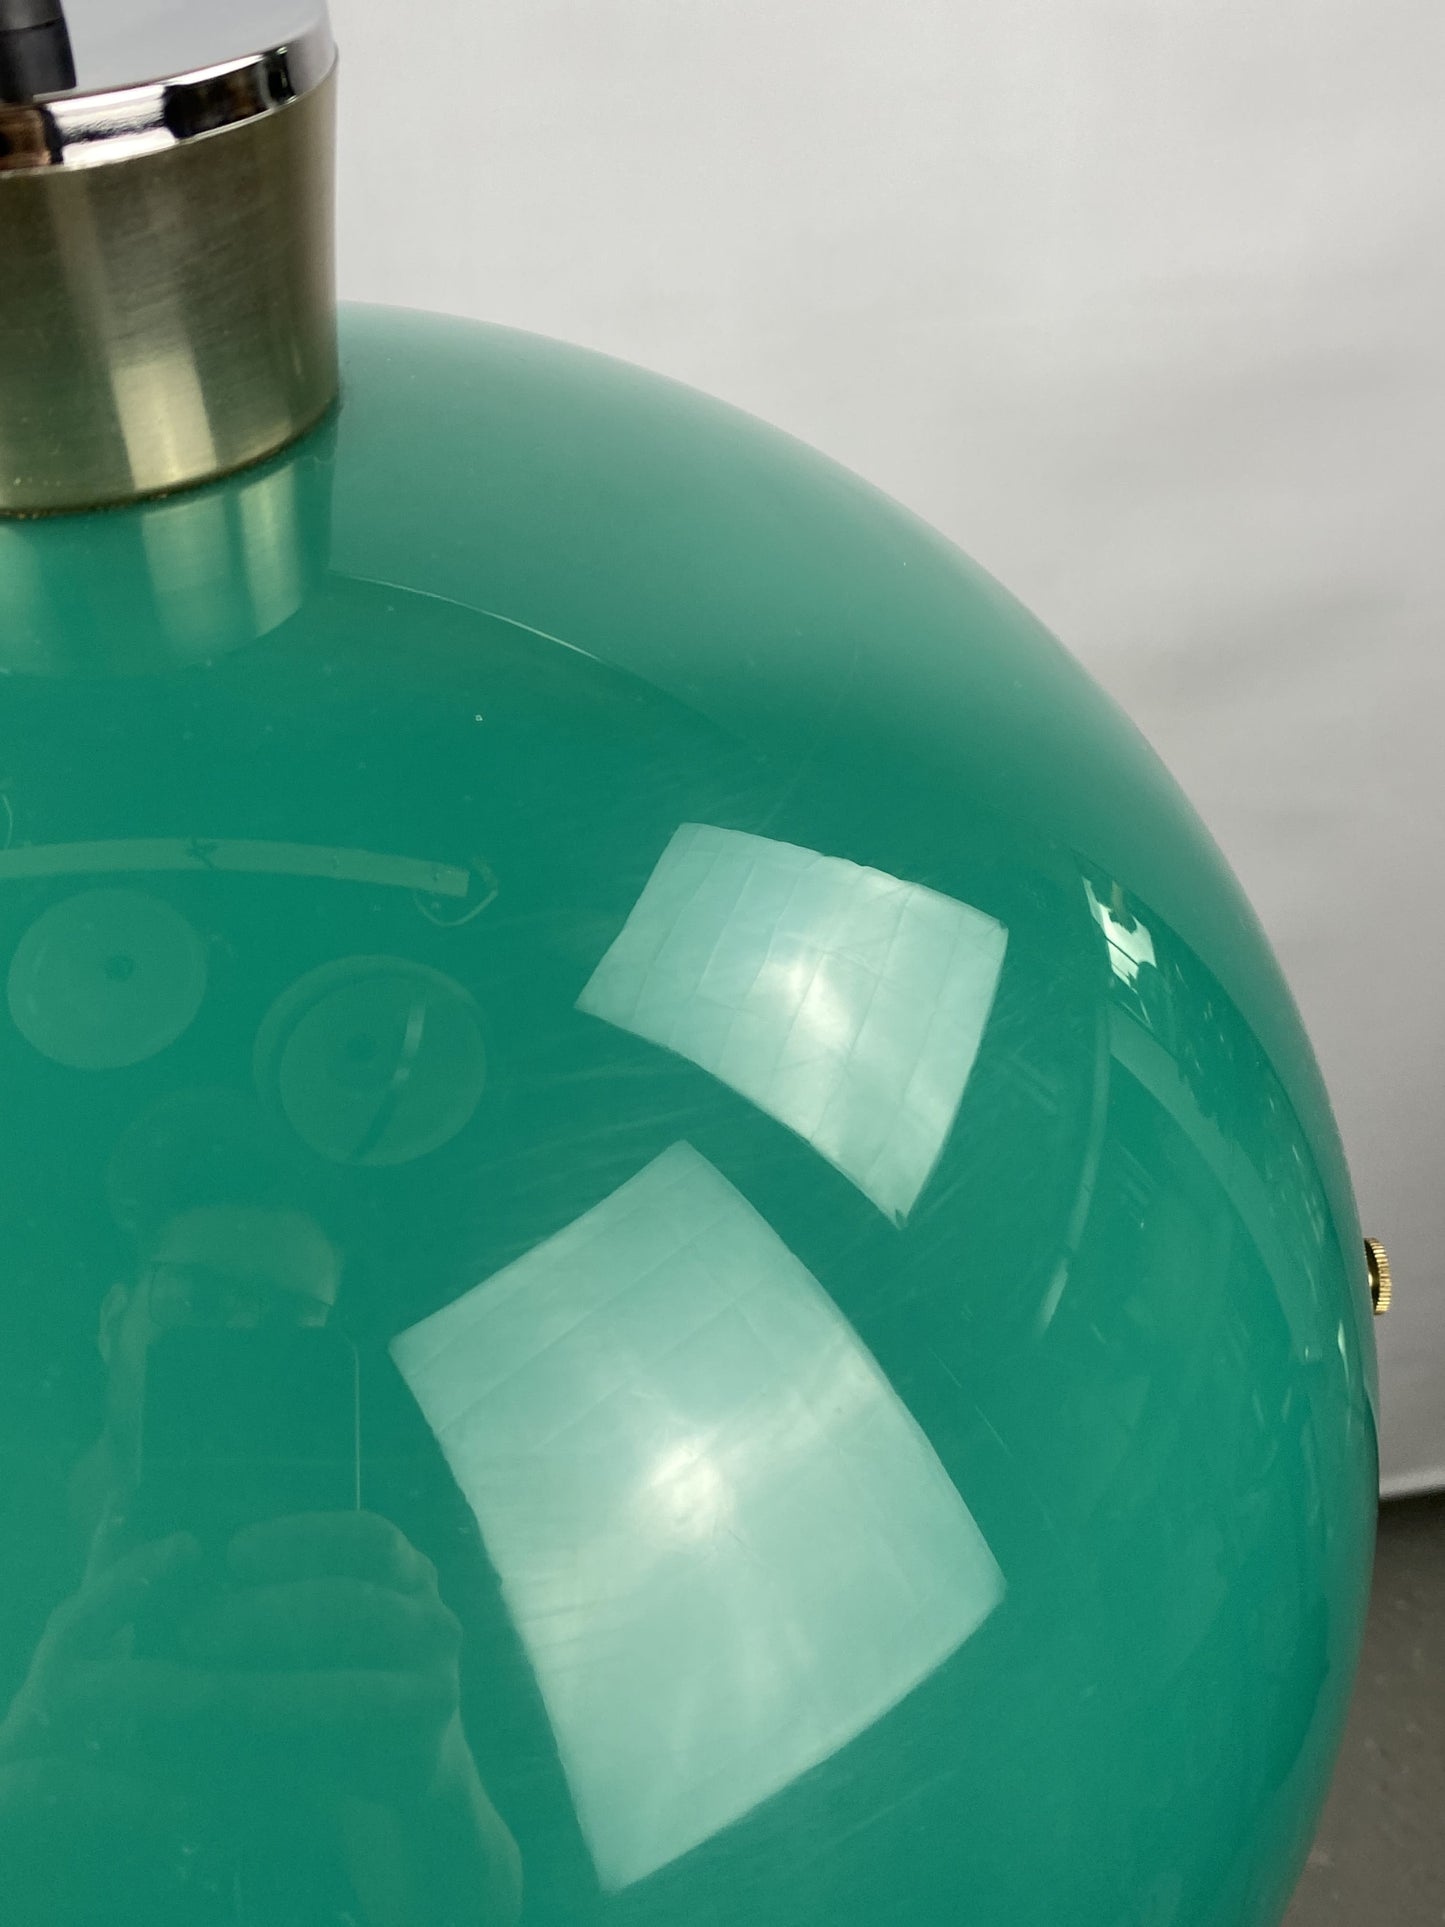 Italian space age plexiglass sphere pendant light by from 1960